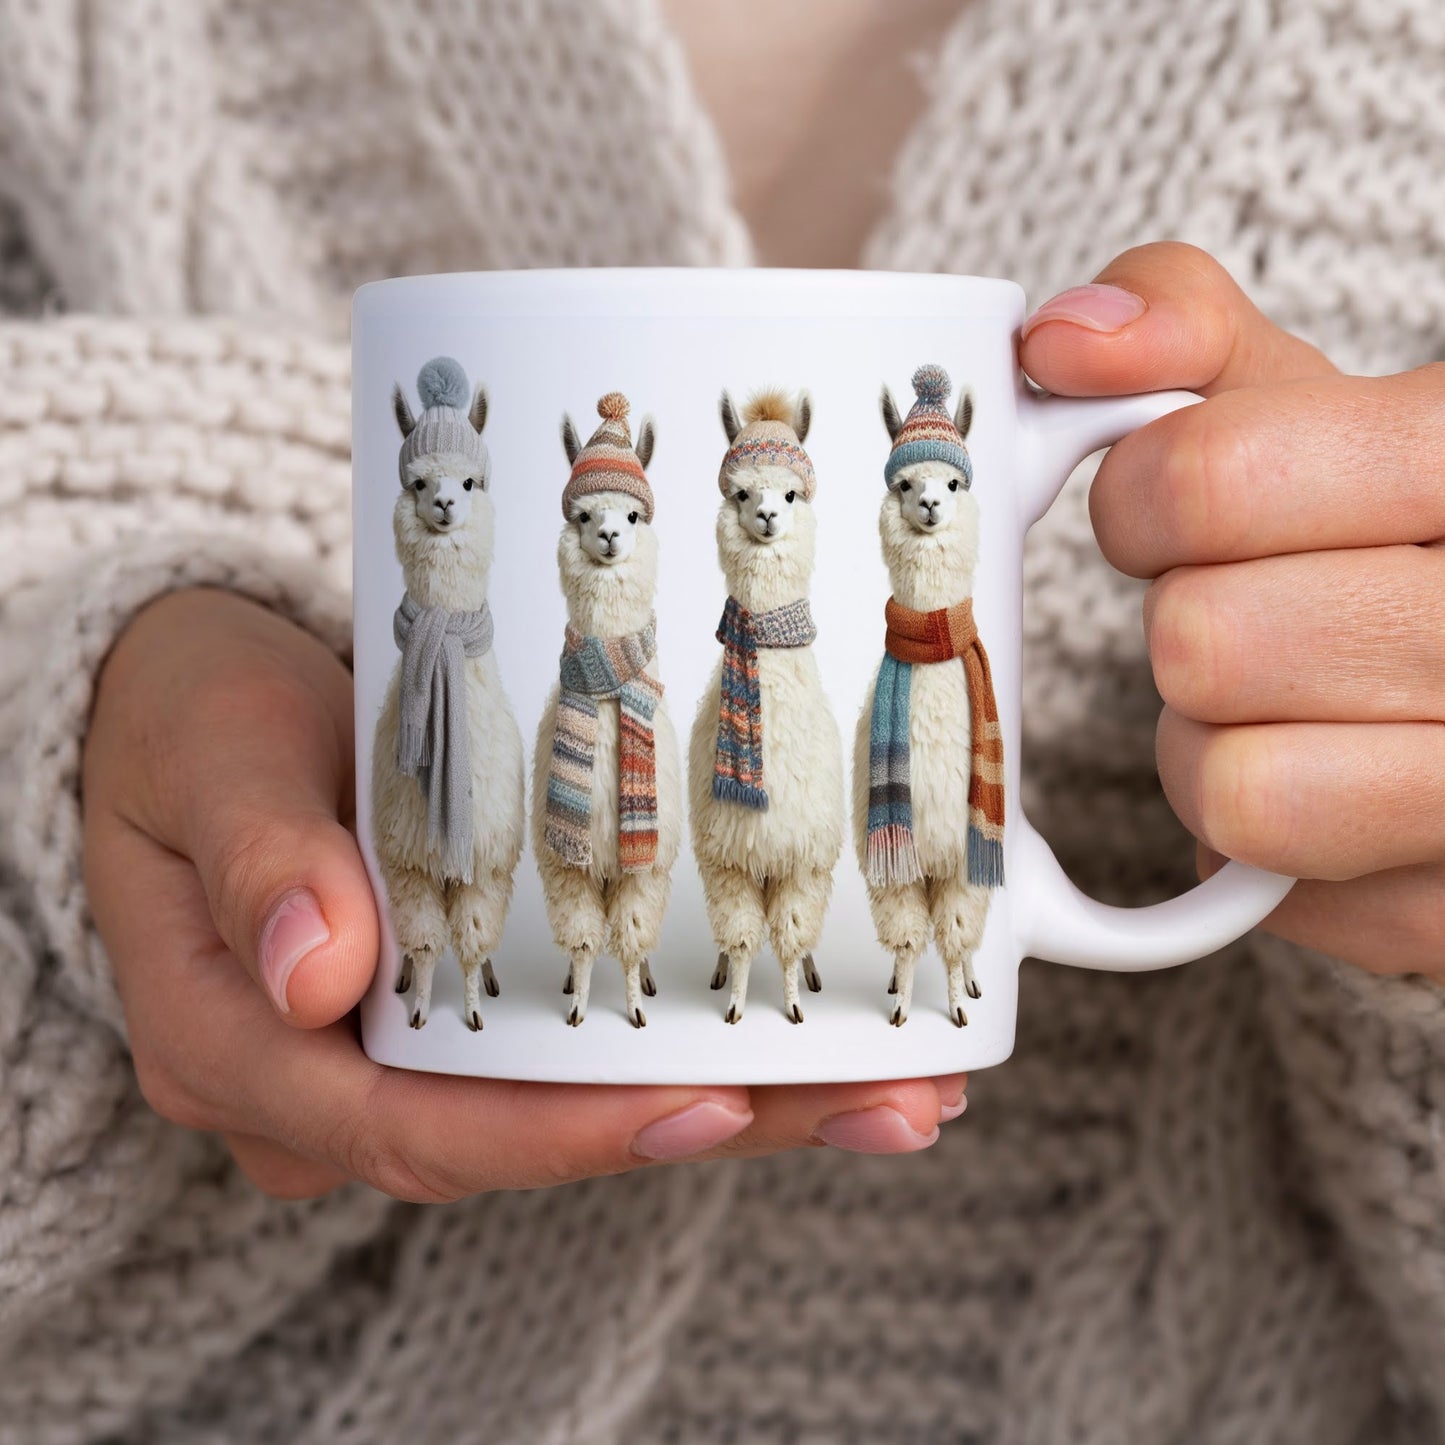 Llama Mugs, Christmas Llama Mugs, Tea Mug, 11oz Coffee Mug, Hot Chocolate Mug, White Elephant Gift Coworker, Family, Mugs Christmas Designs